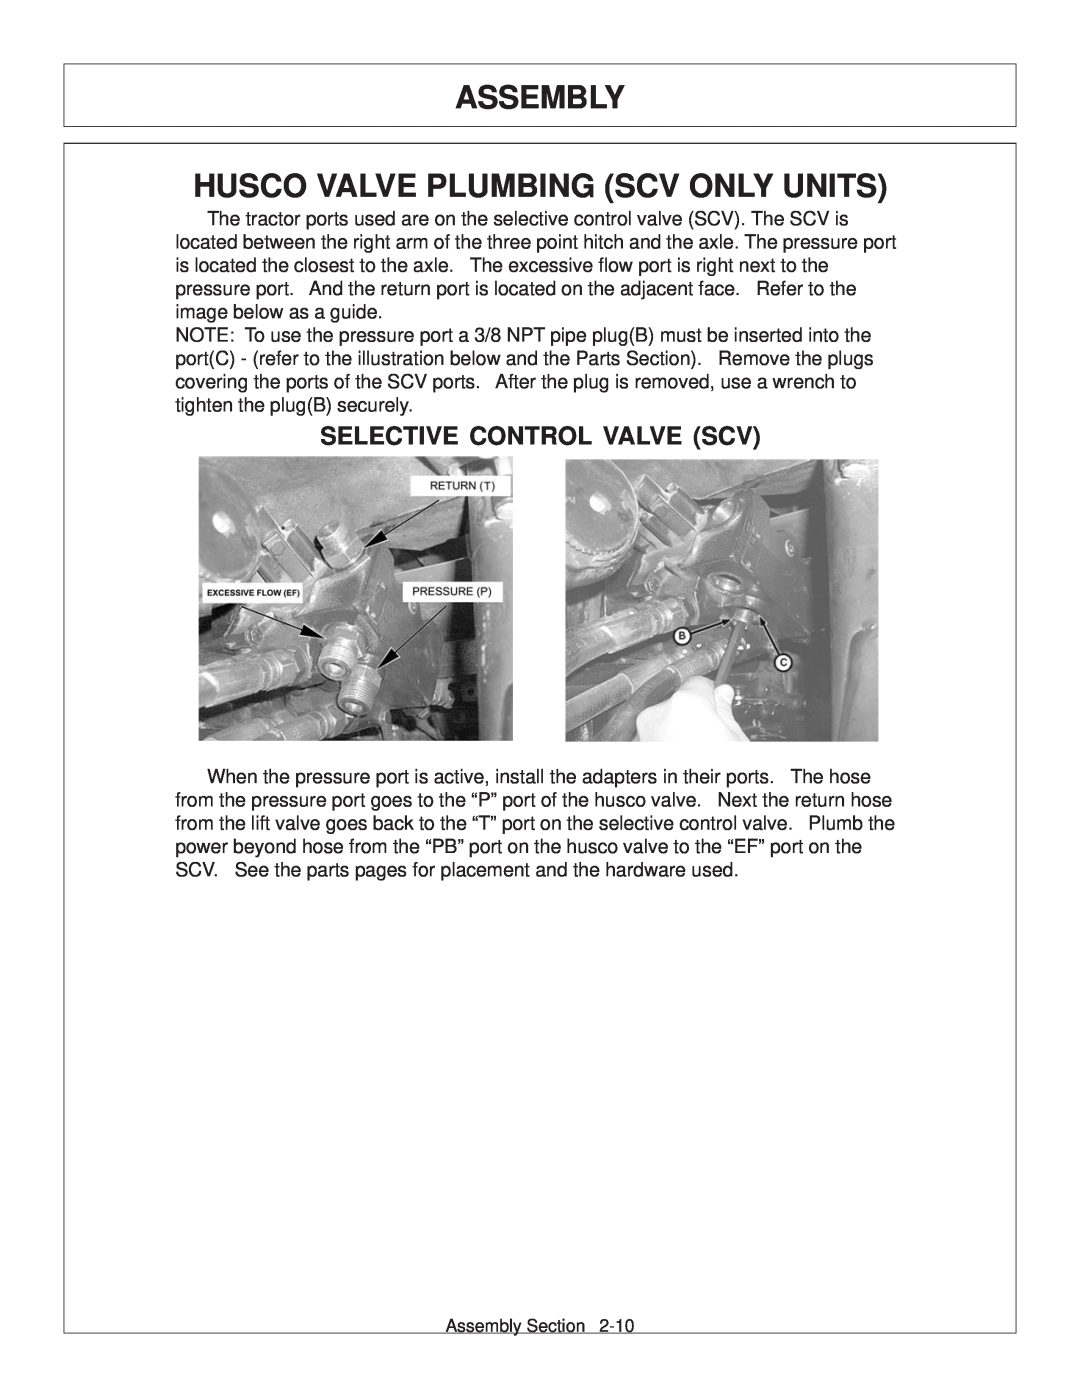 Tiger Products Co., Ltd JD 5093E, JD 5101E manual Assembly Husco Valve Plumbing Scv Only Units, Selective Control Valve Scv 